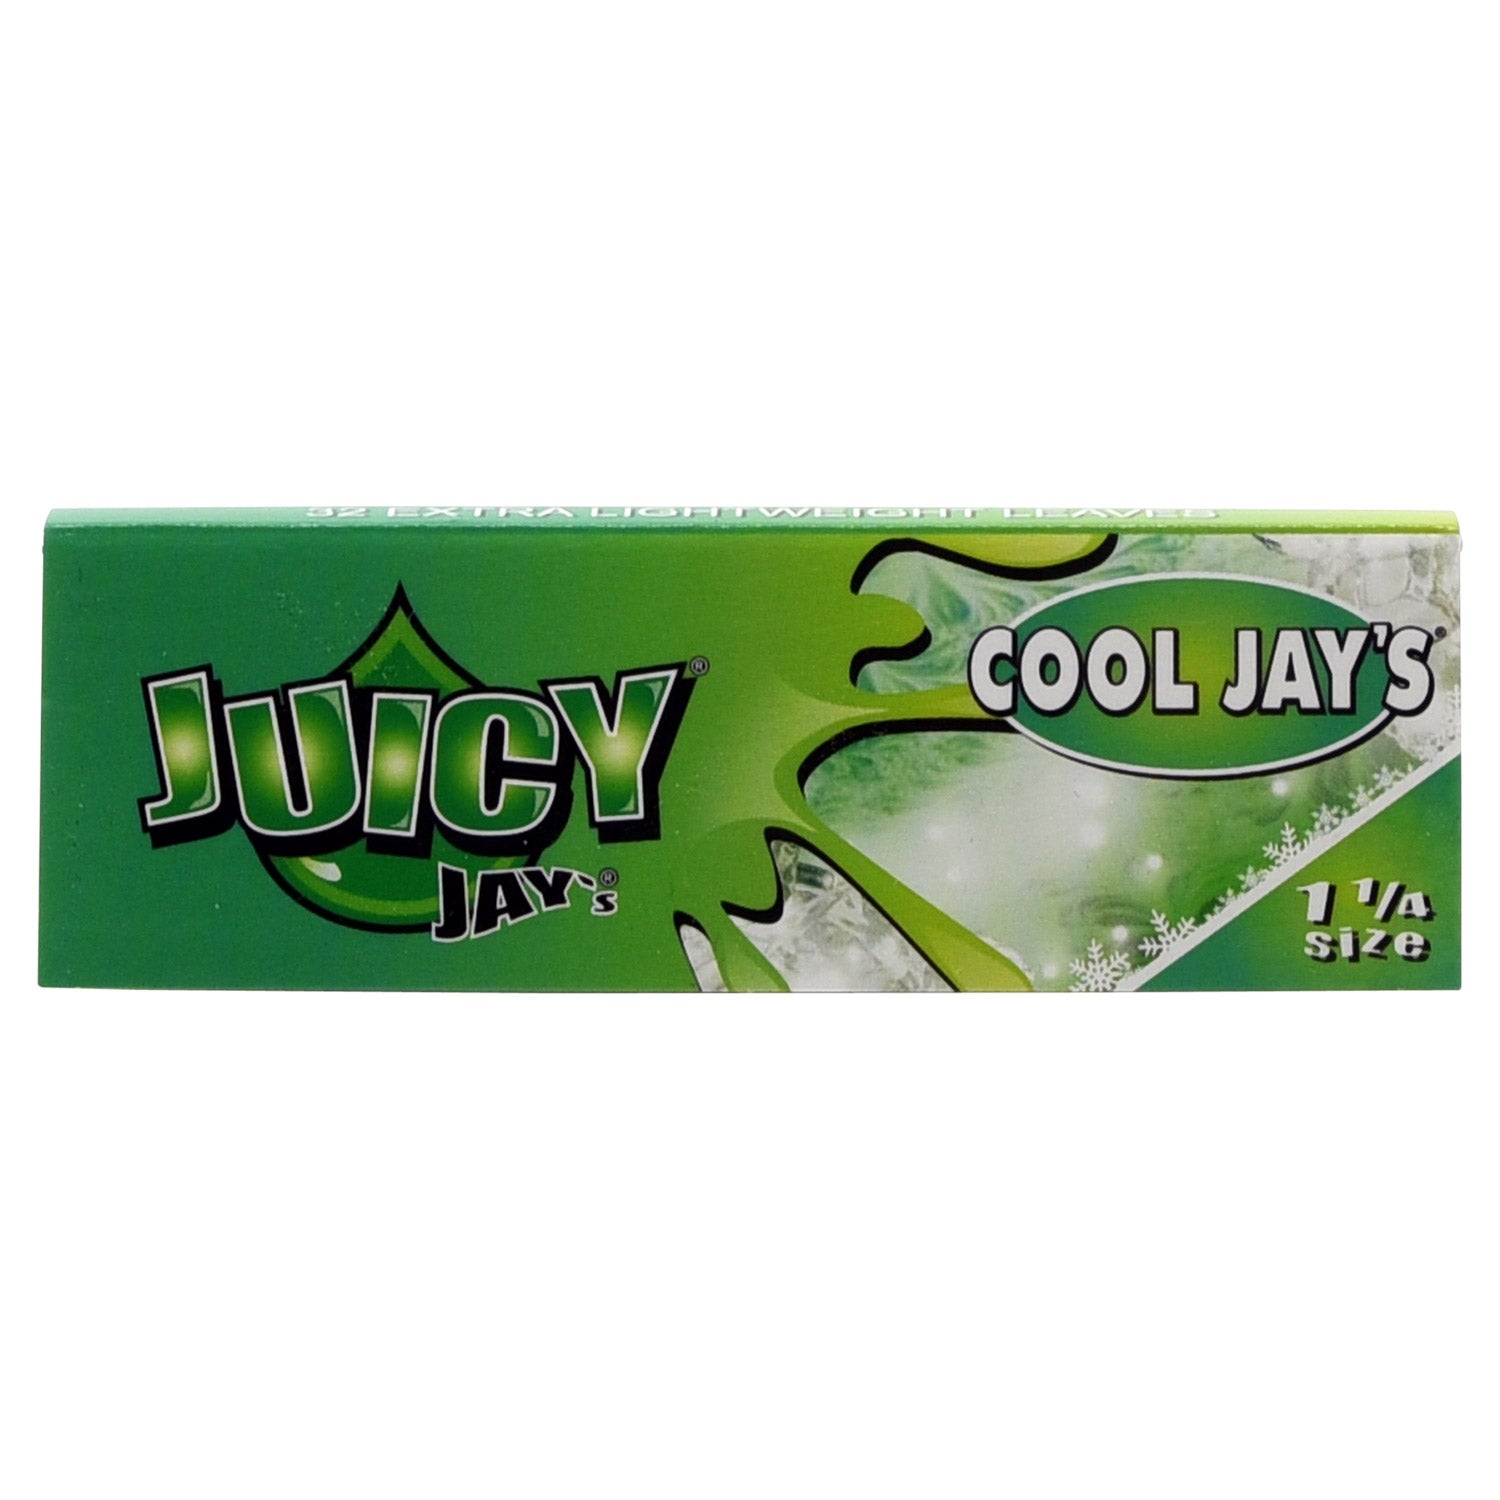 Juicy Jay's 1 1/4 Size Rolling Paper